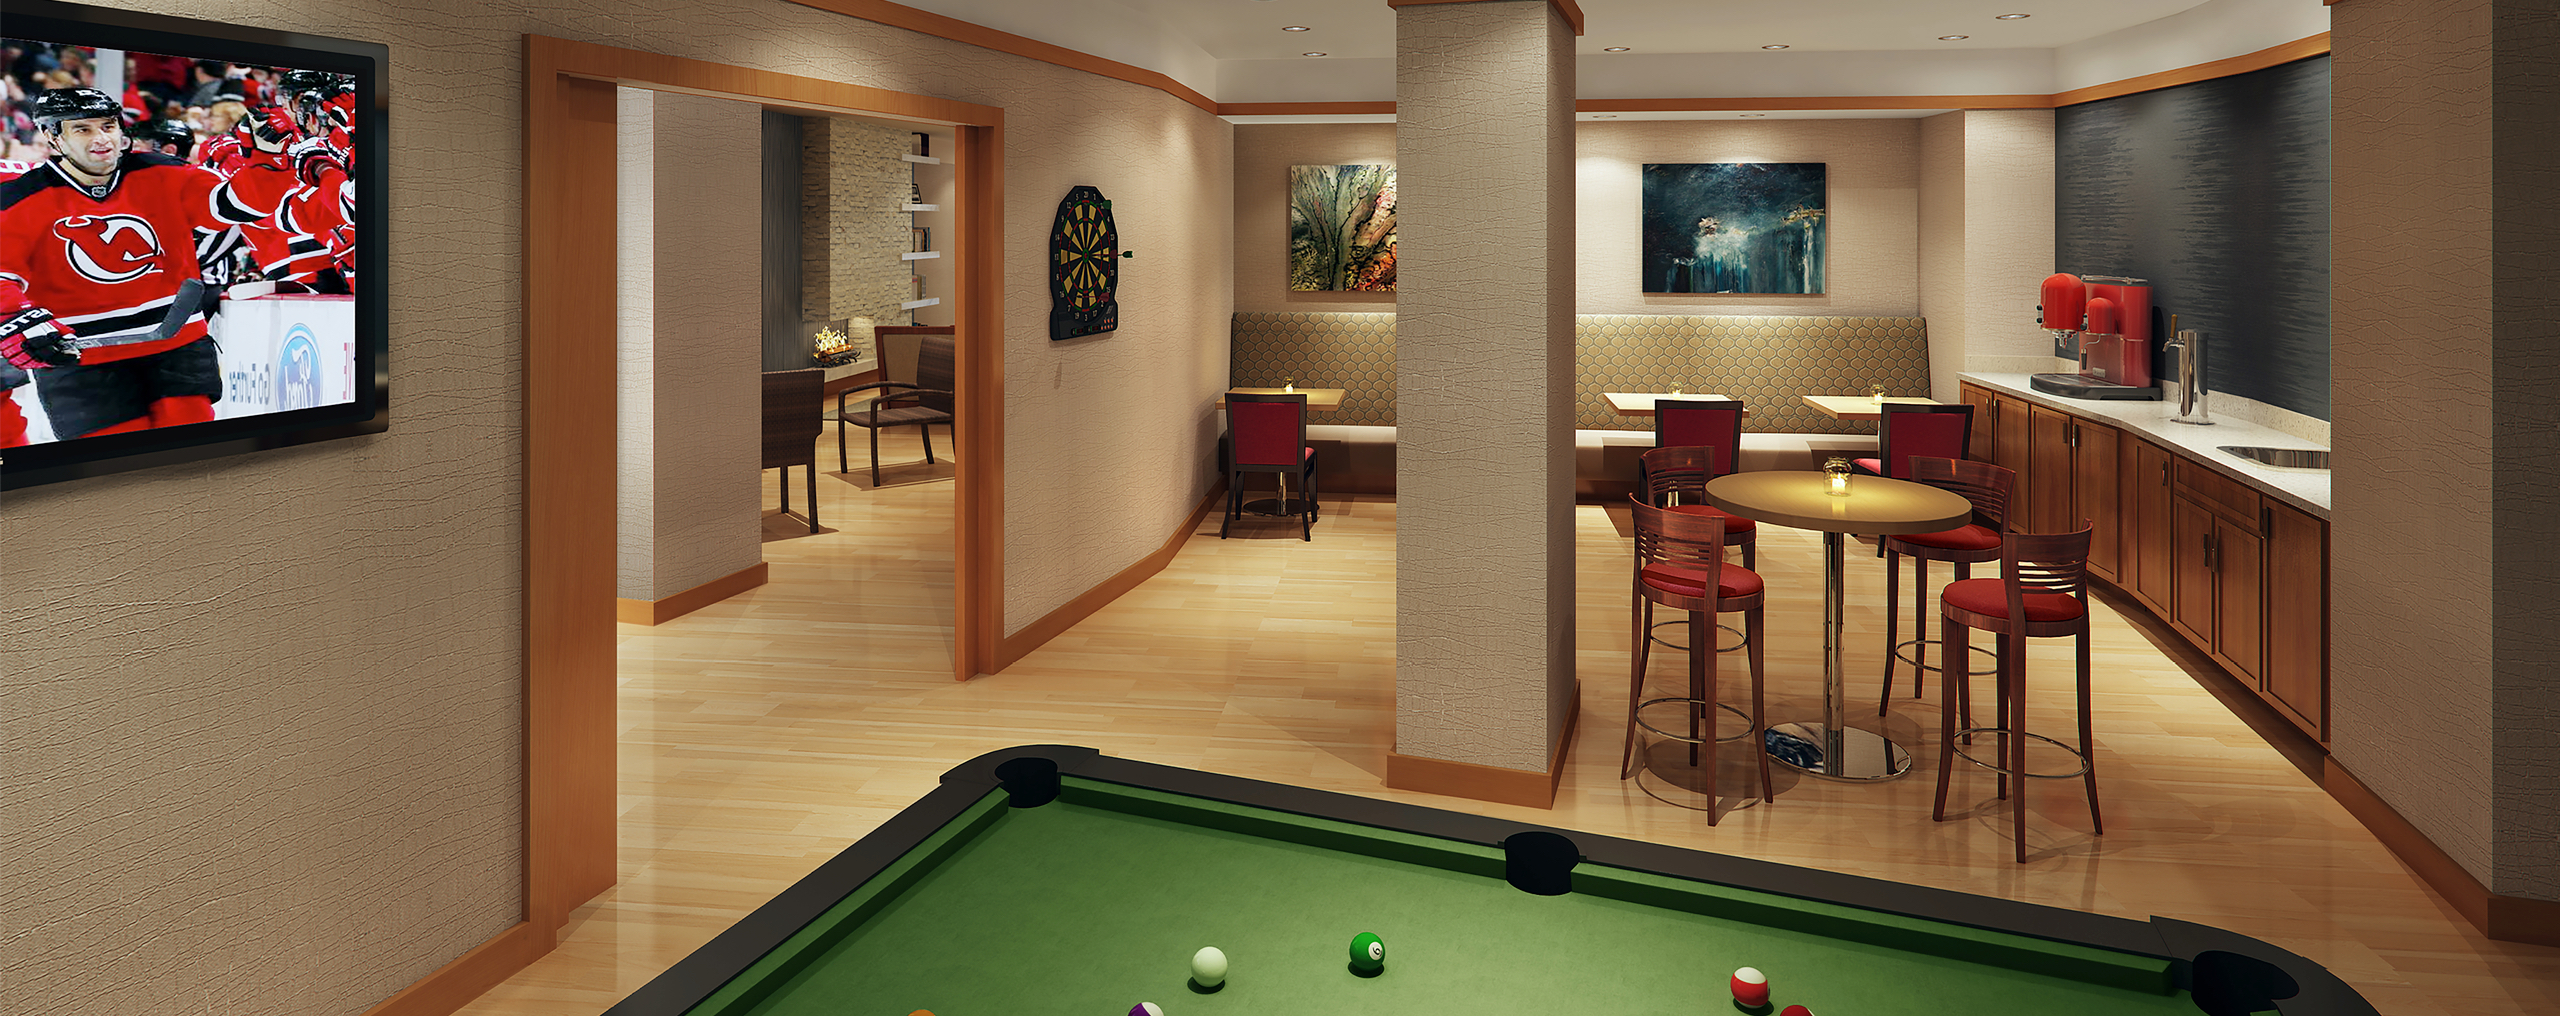 play billiards apartments in brooklyn